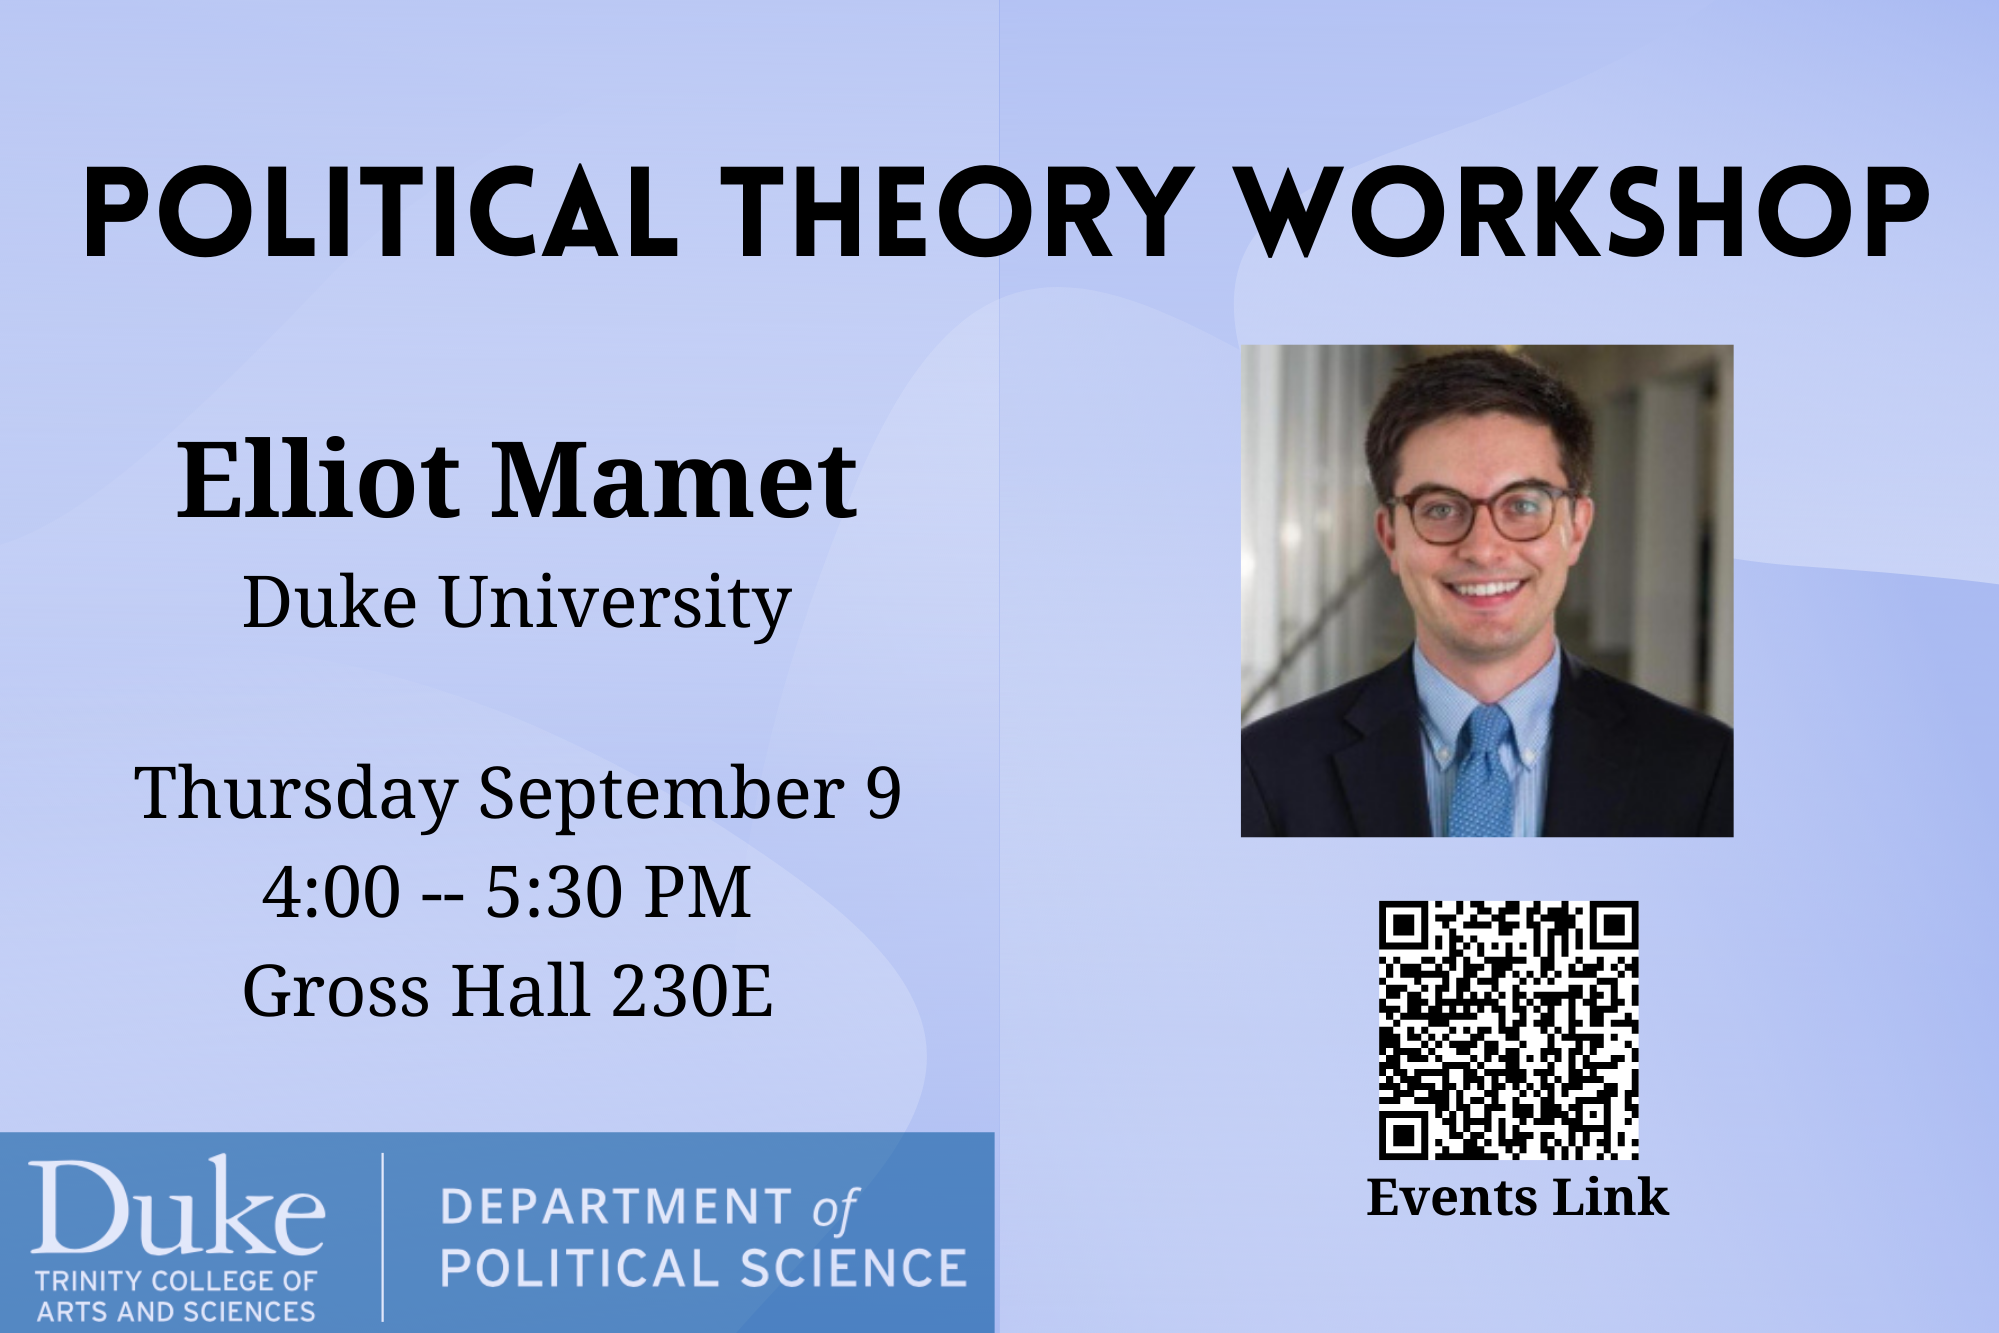 Political Theory Workshop flyer